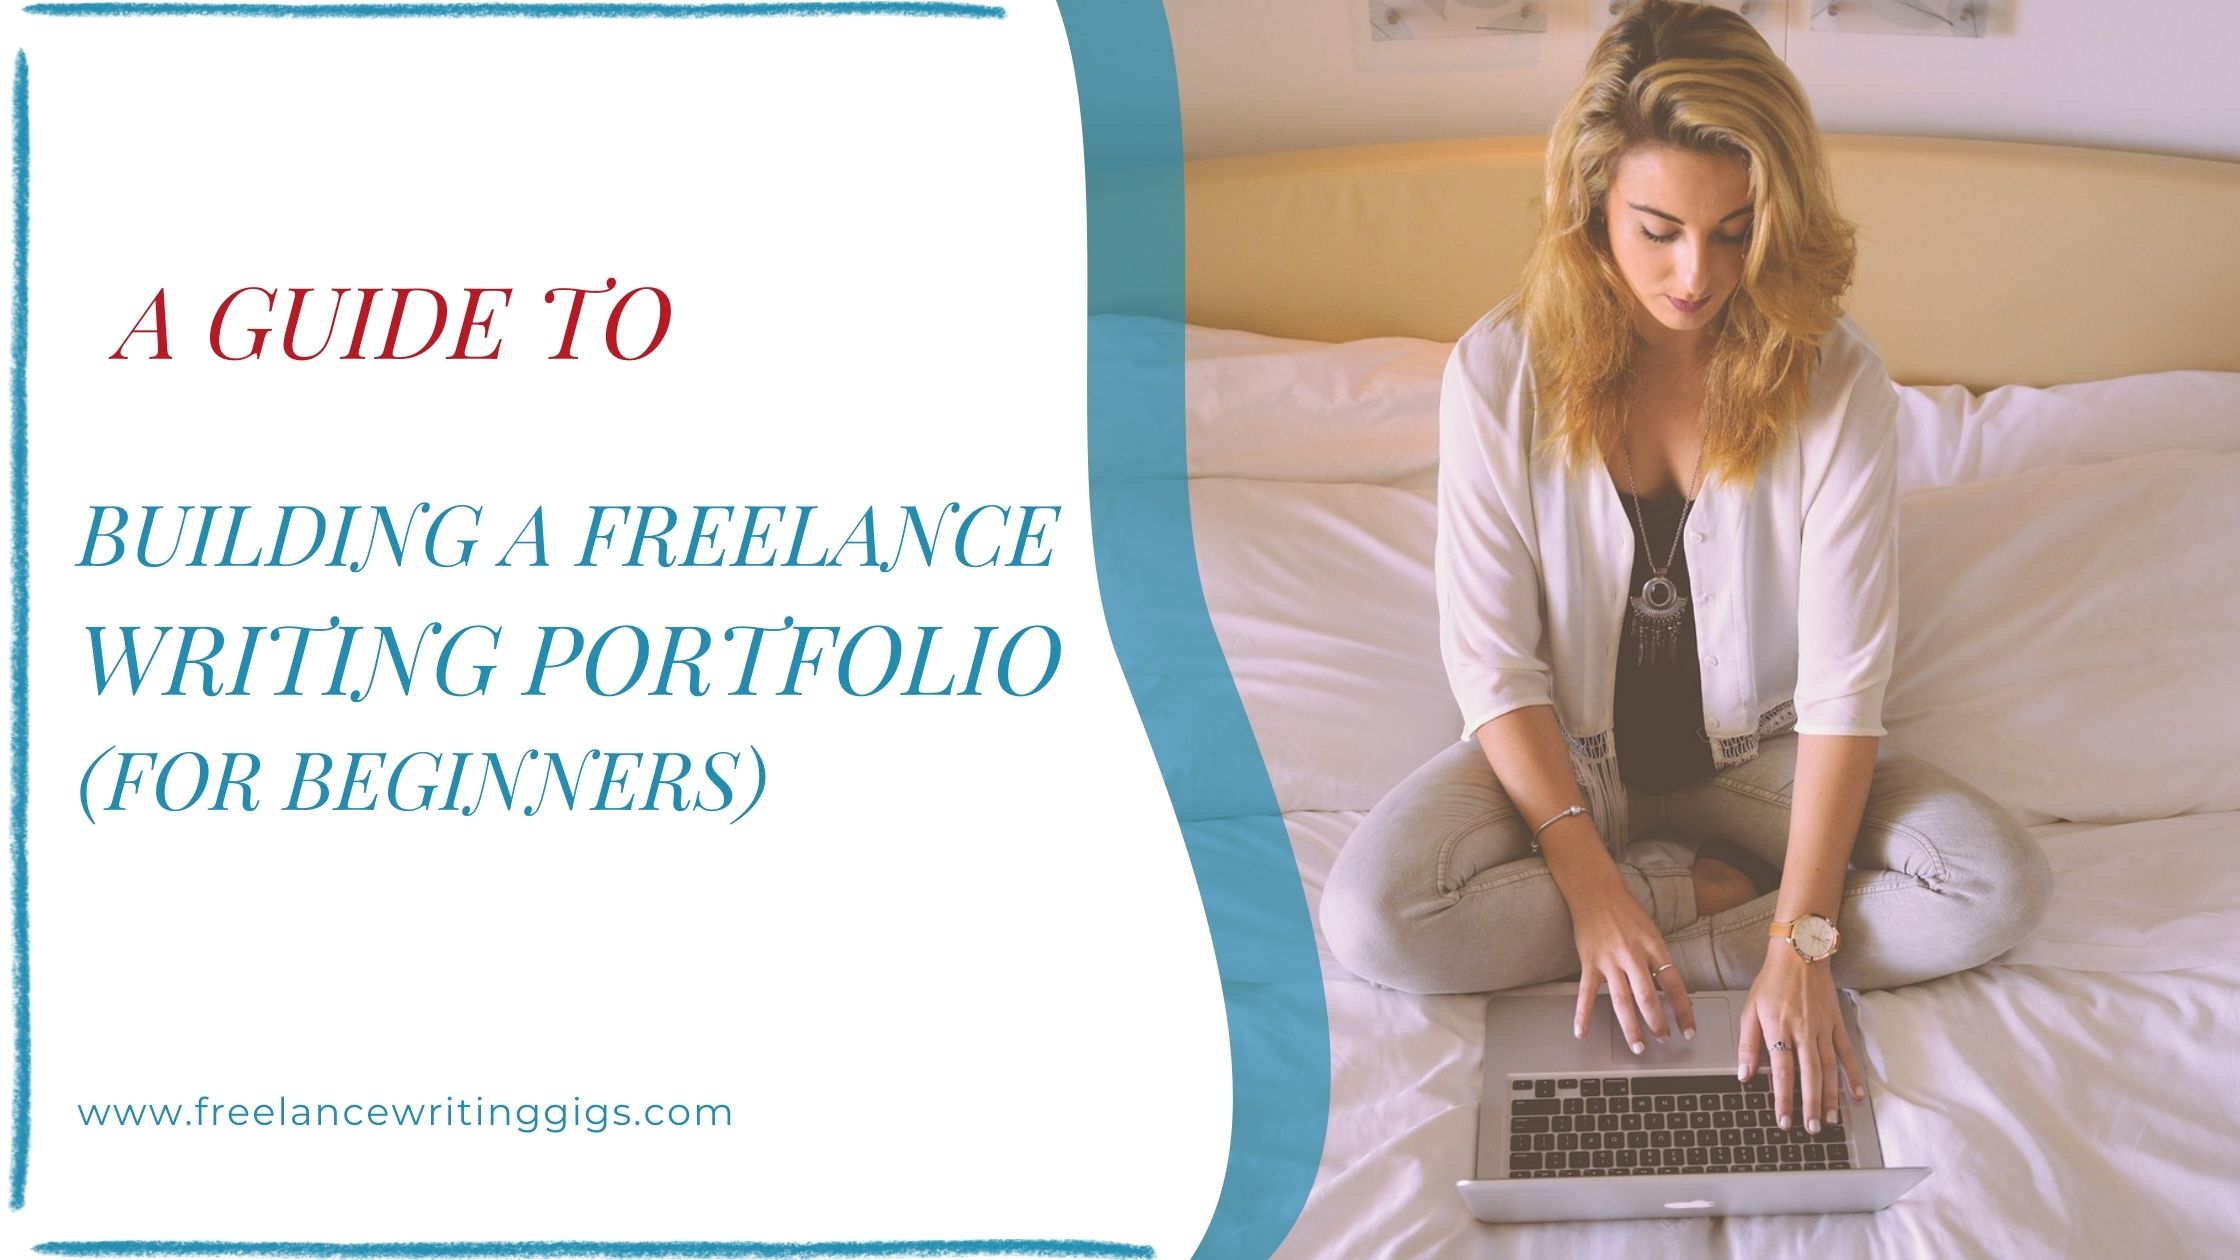 A Guide to Building a Freelance Writing Portfolio for Beginners